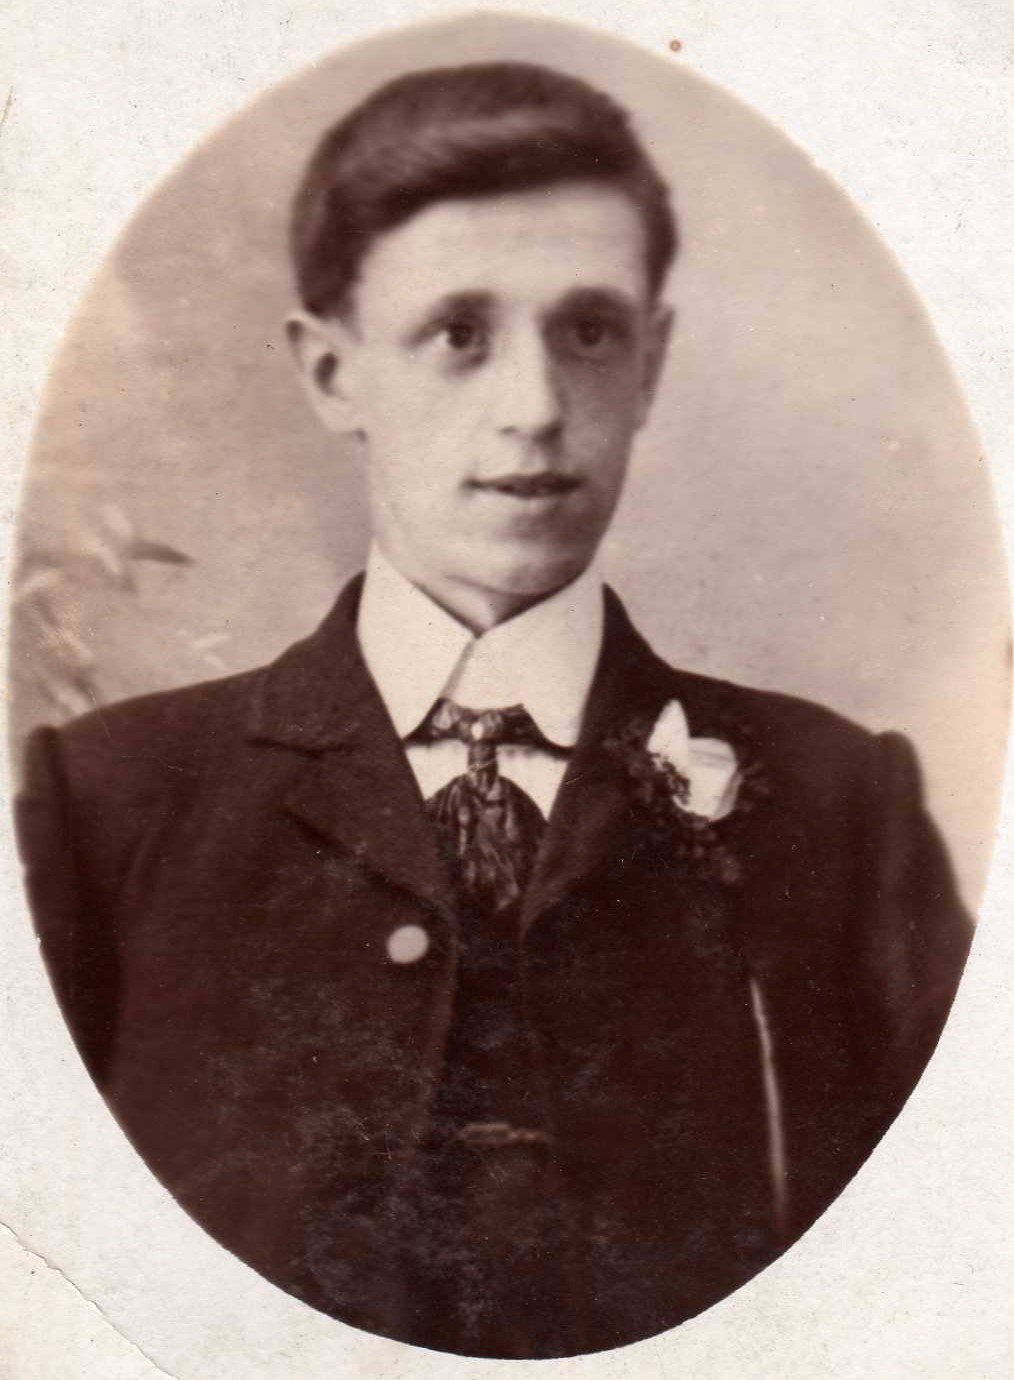 David Middleton, aged about 20